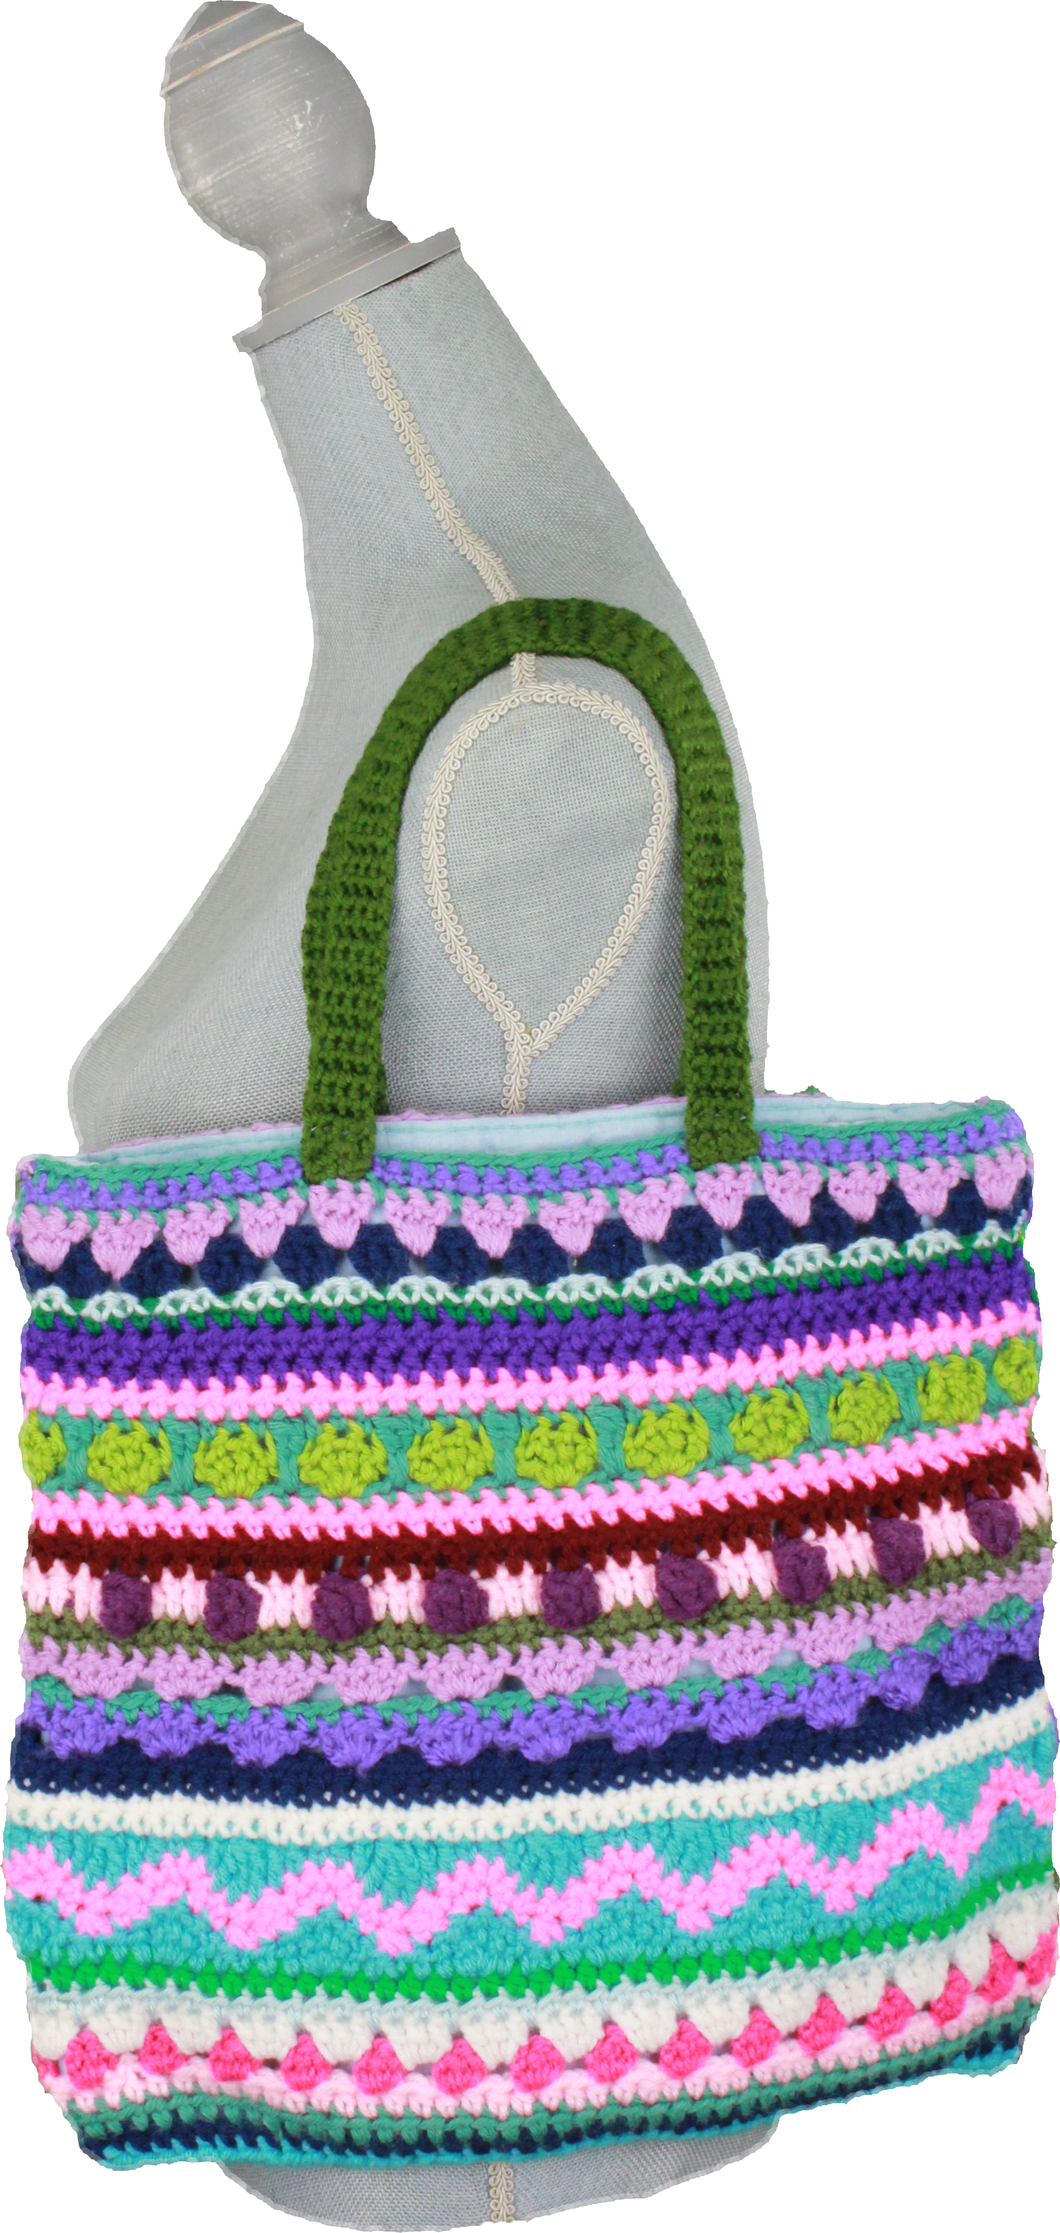 Crochet Bag by Mama Bunnee